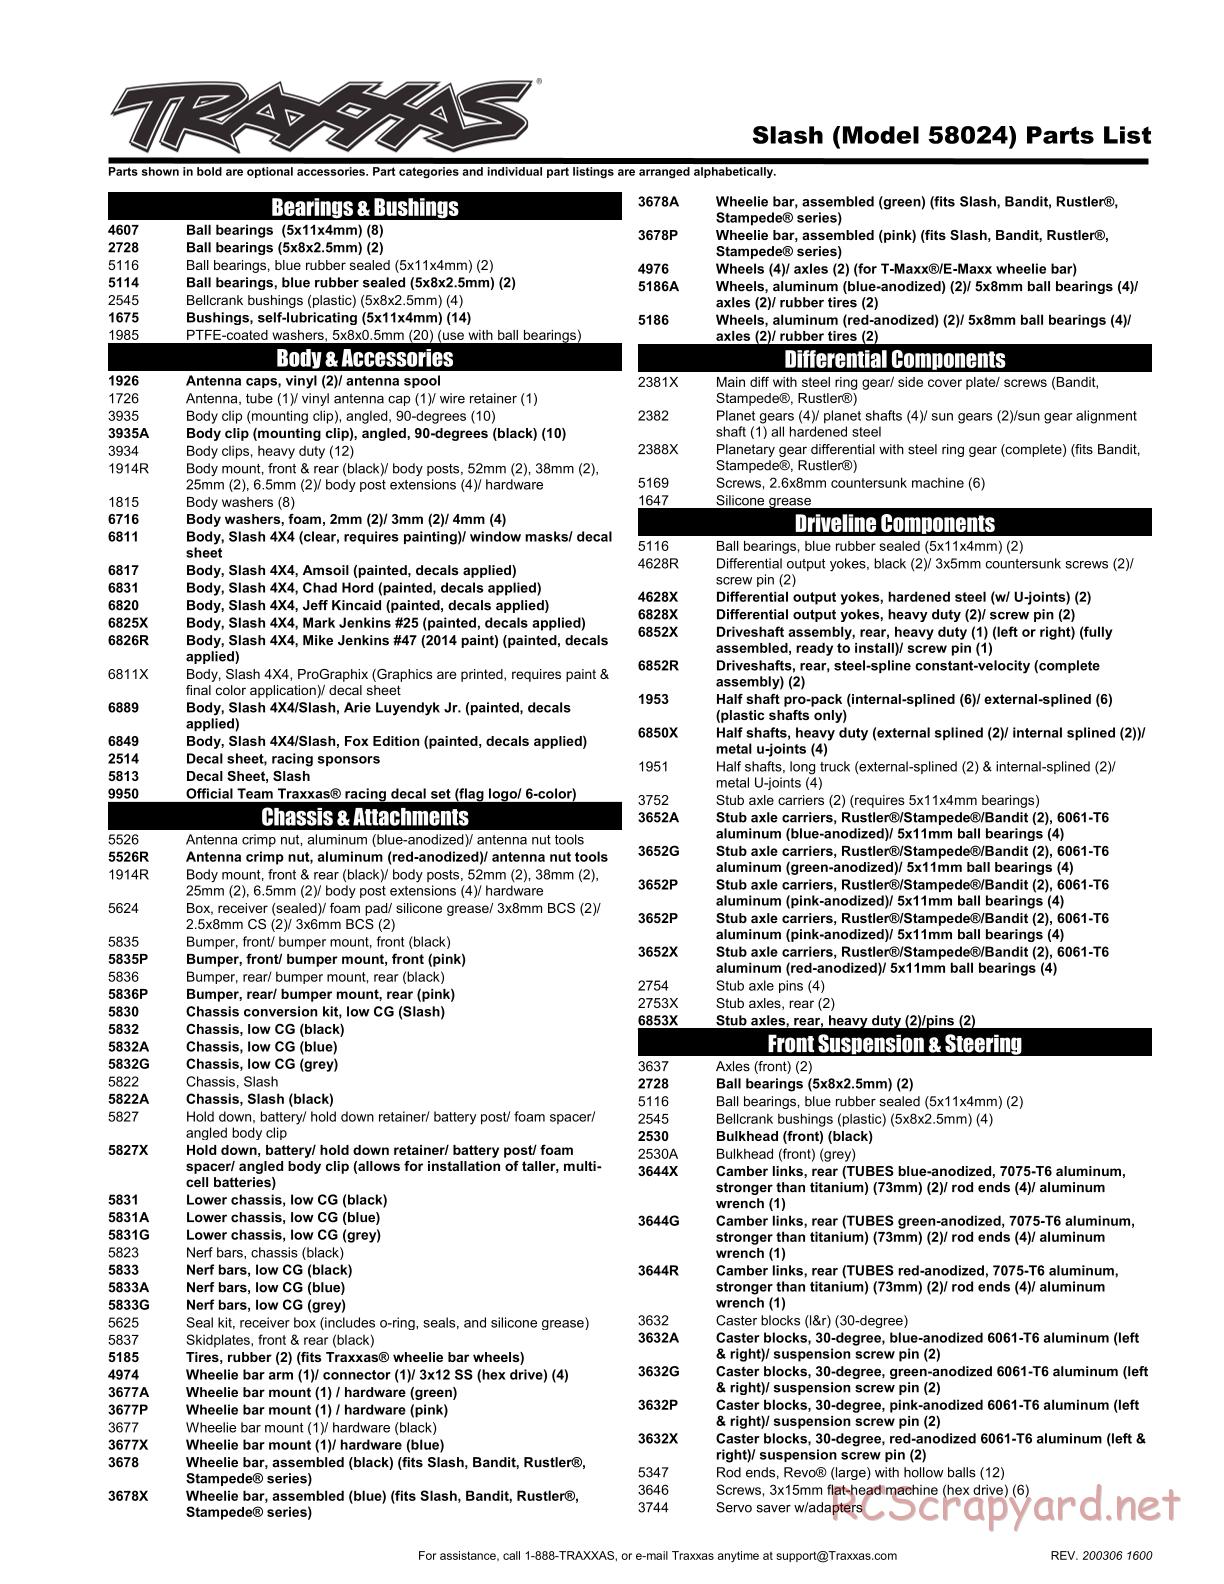 Traxxas - Slash 2WD - Parts List - Page 1